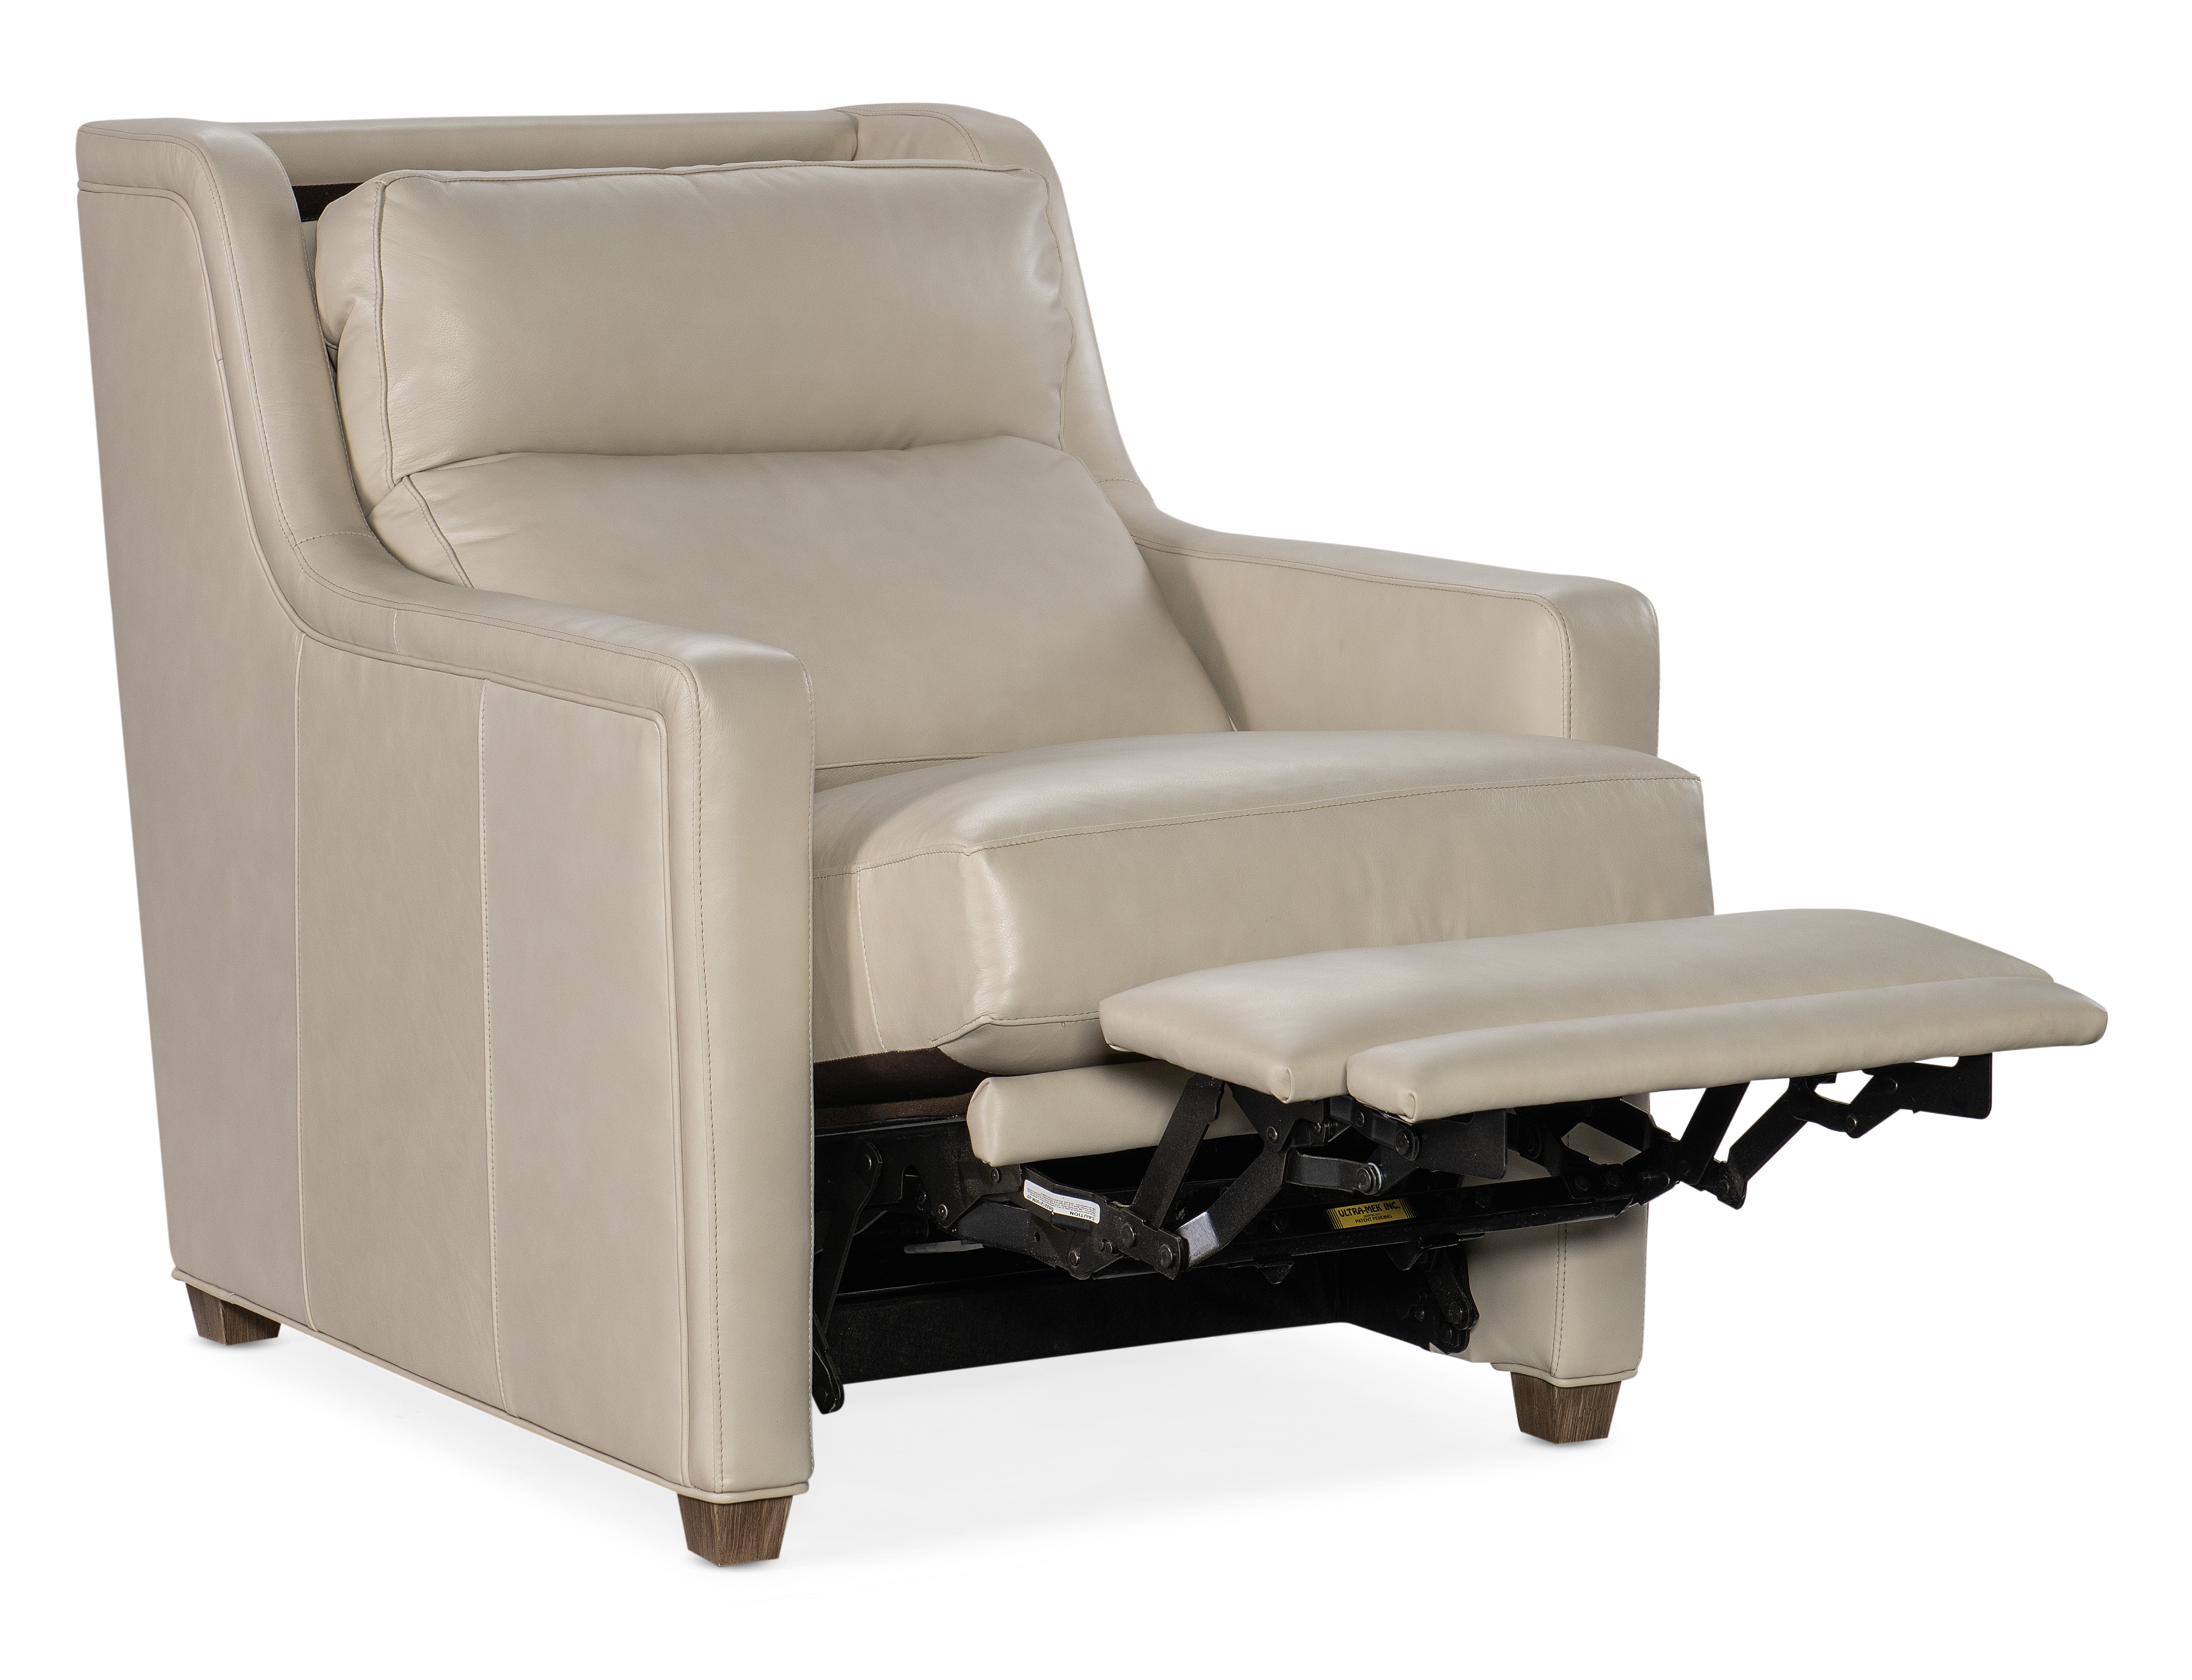 Bradington Young Living Room Hambrick Chair Full Recline 950-35 